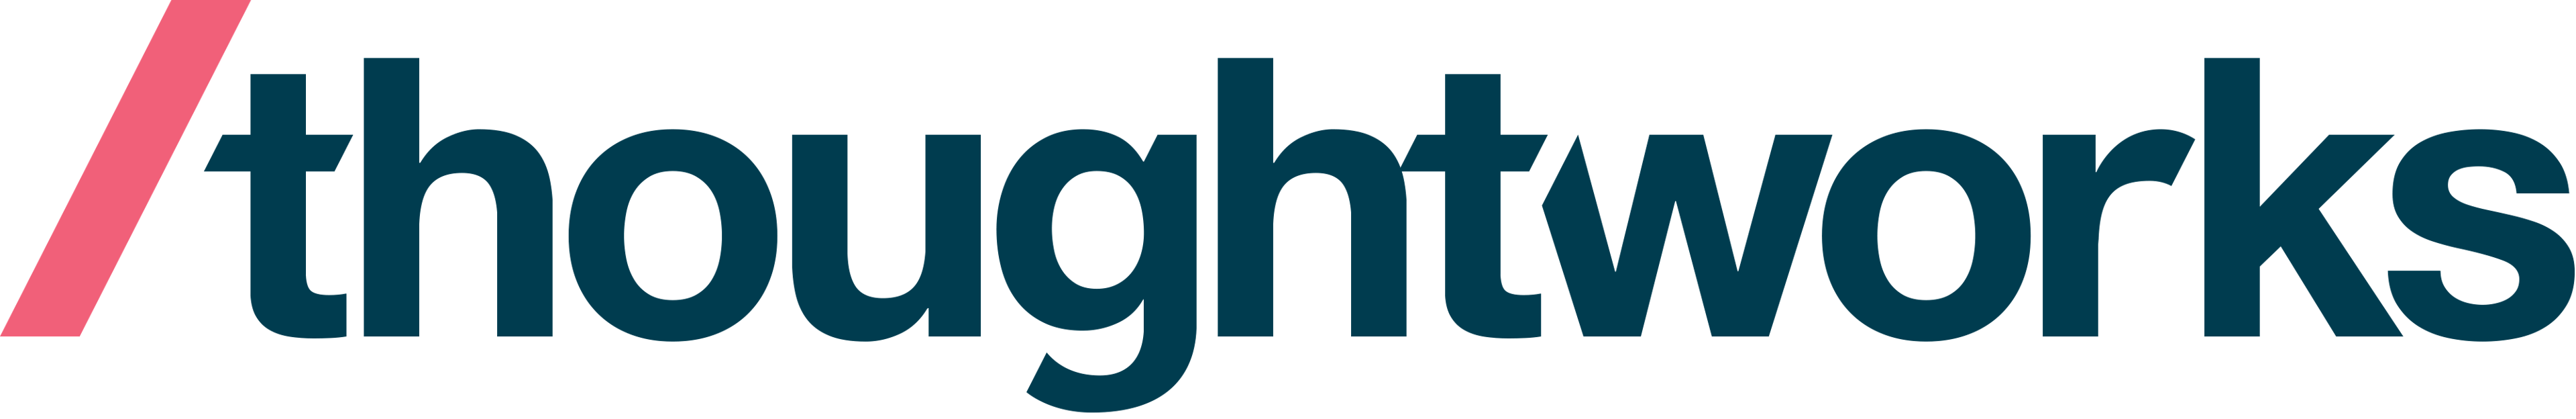 Thoughtworks logo logo